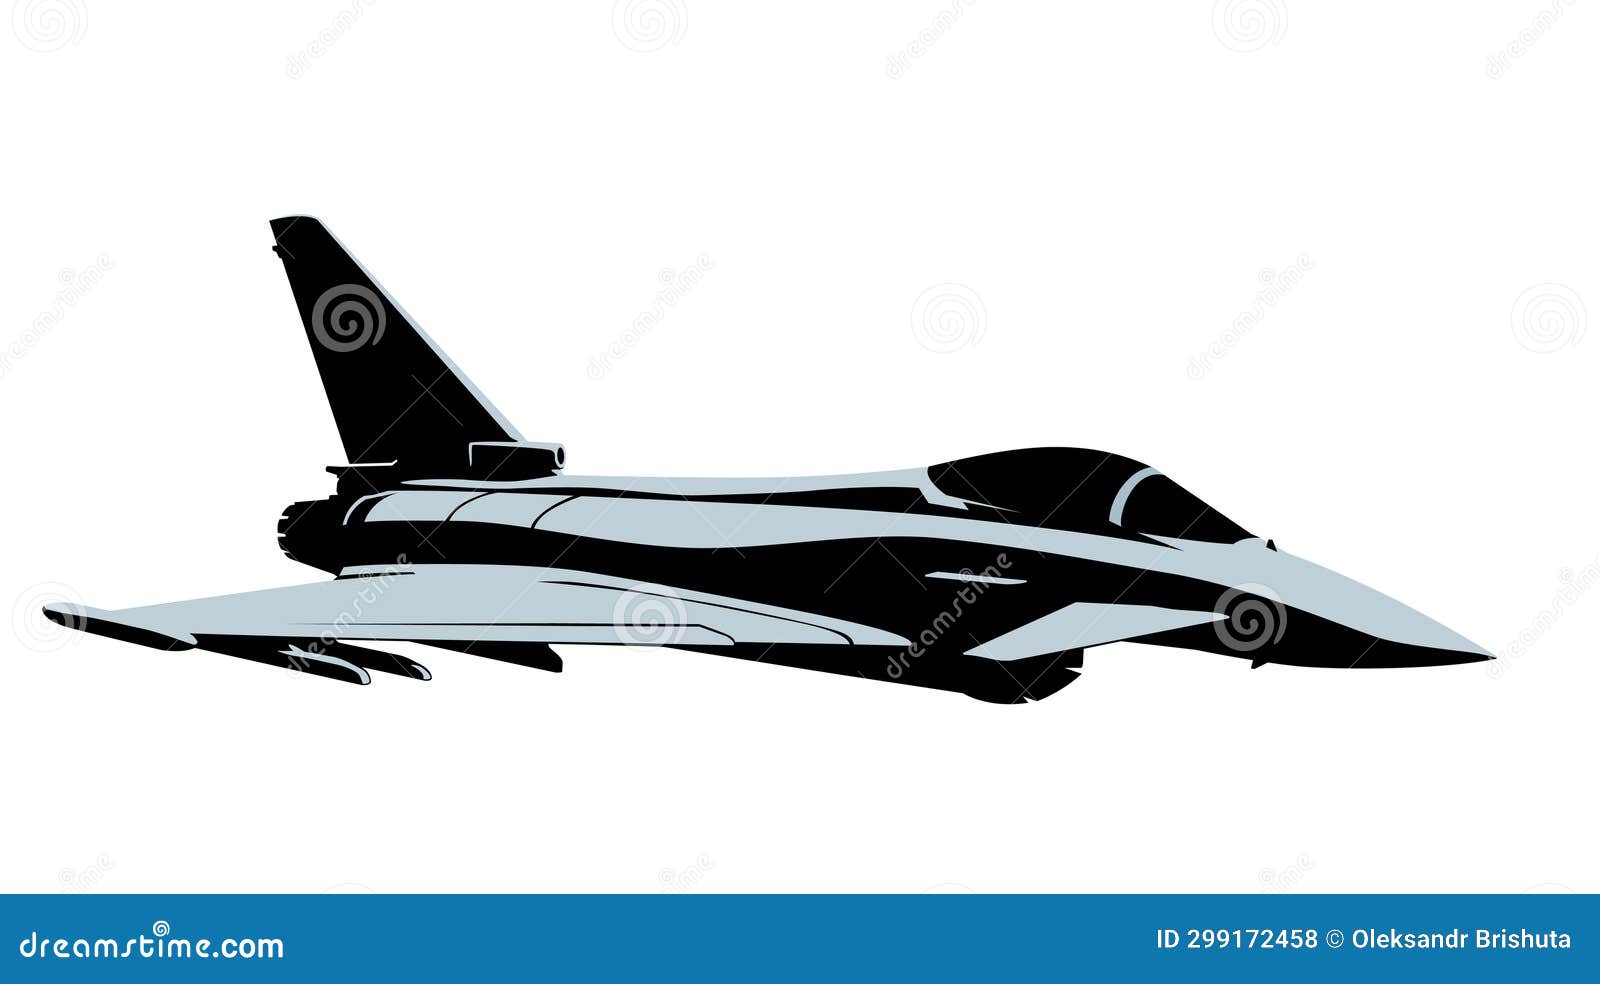 eurofighter typhoon fighter jet. a modern supersonic combat aircraft.